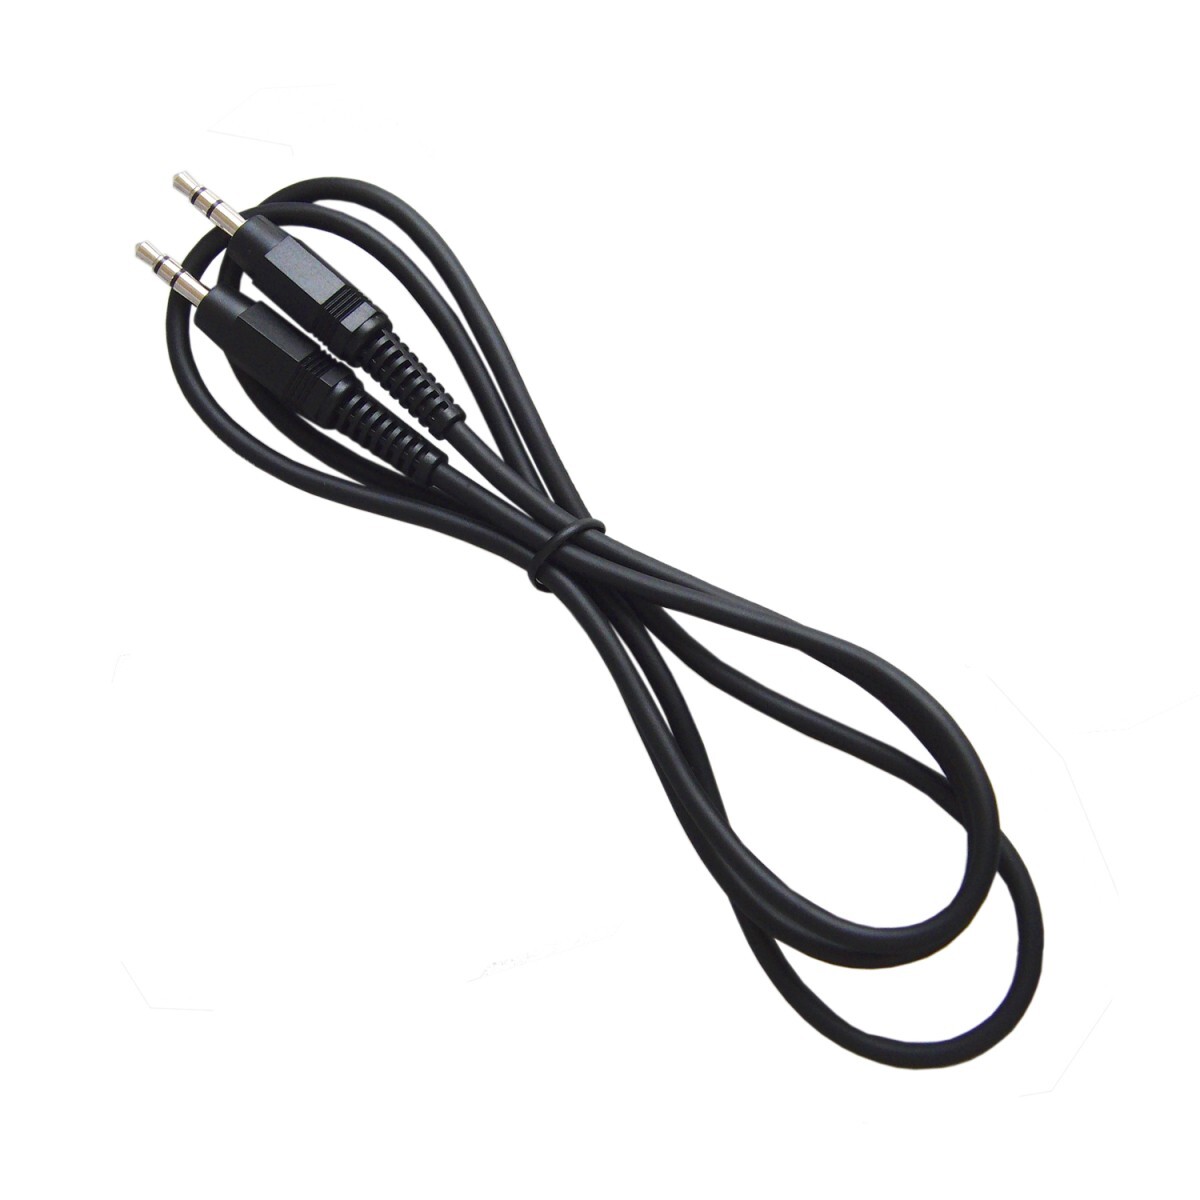  audio cable 1m 3.5mm stereo Mini plug ( male - male ) B-1